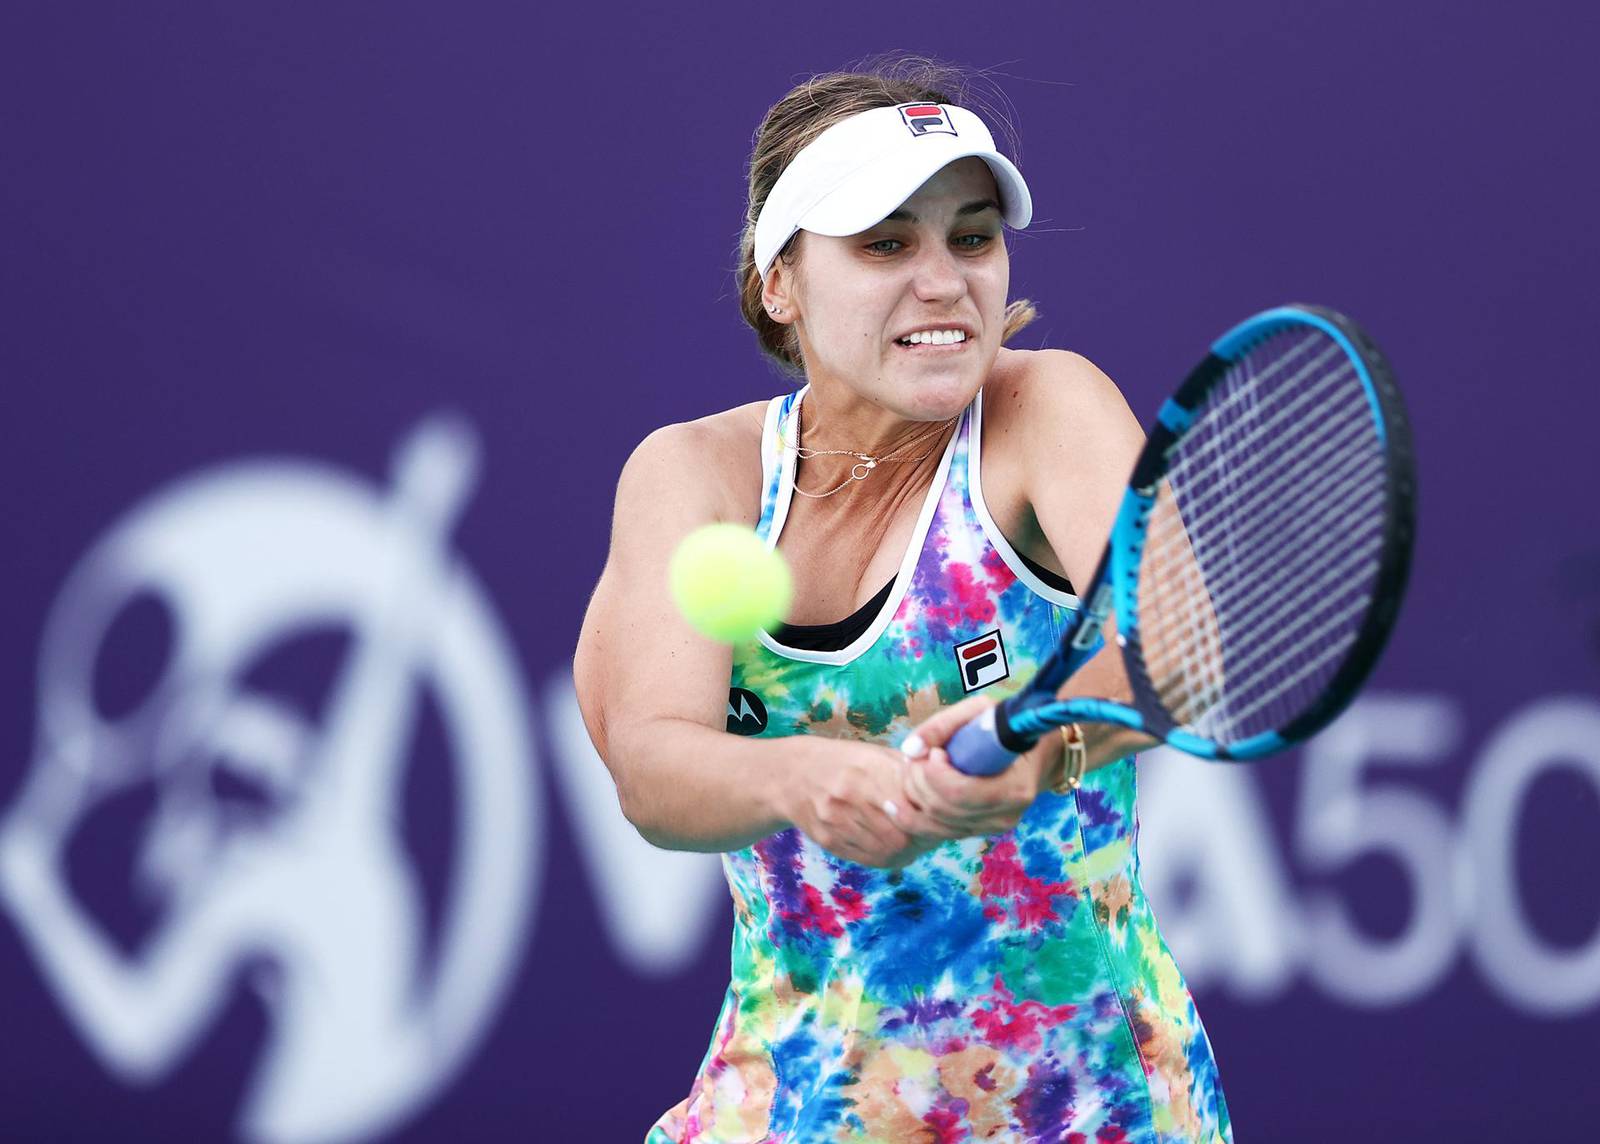 Abu Dhabi WTA Women’s Tennis Open Day 2 updates Sofia Kenin, Elina